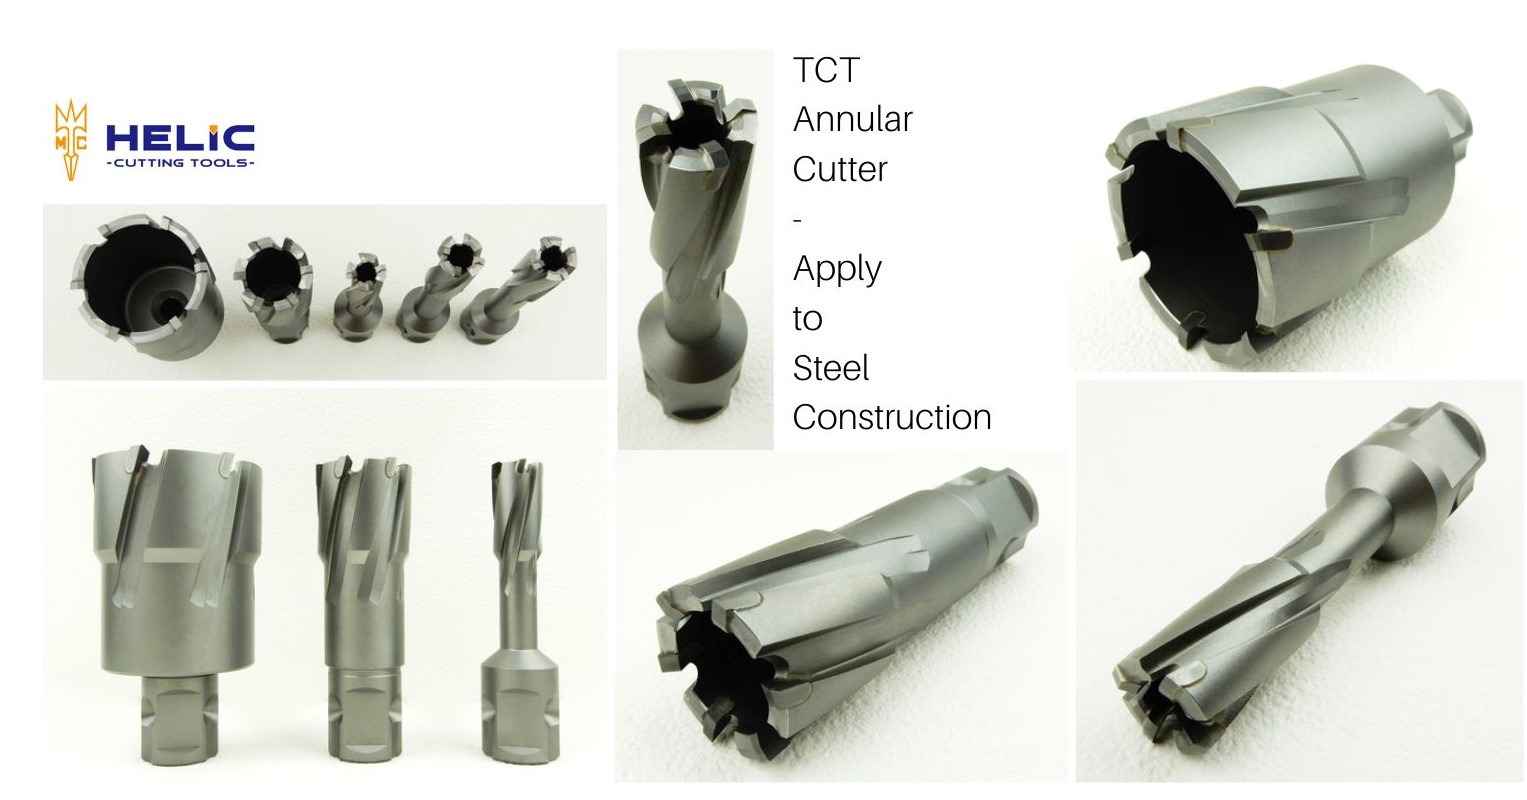 TCT Annular Cutter